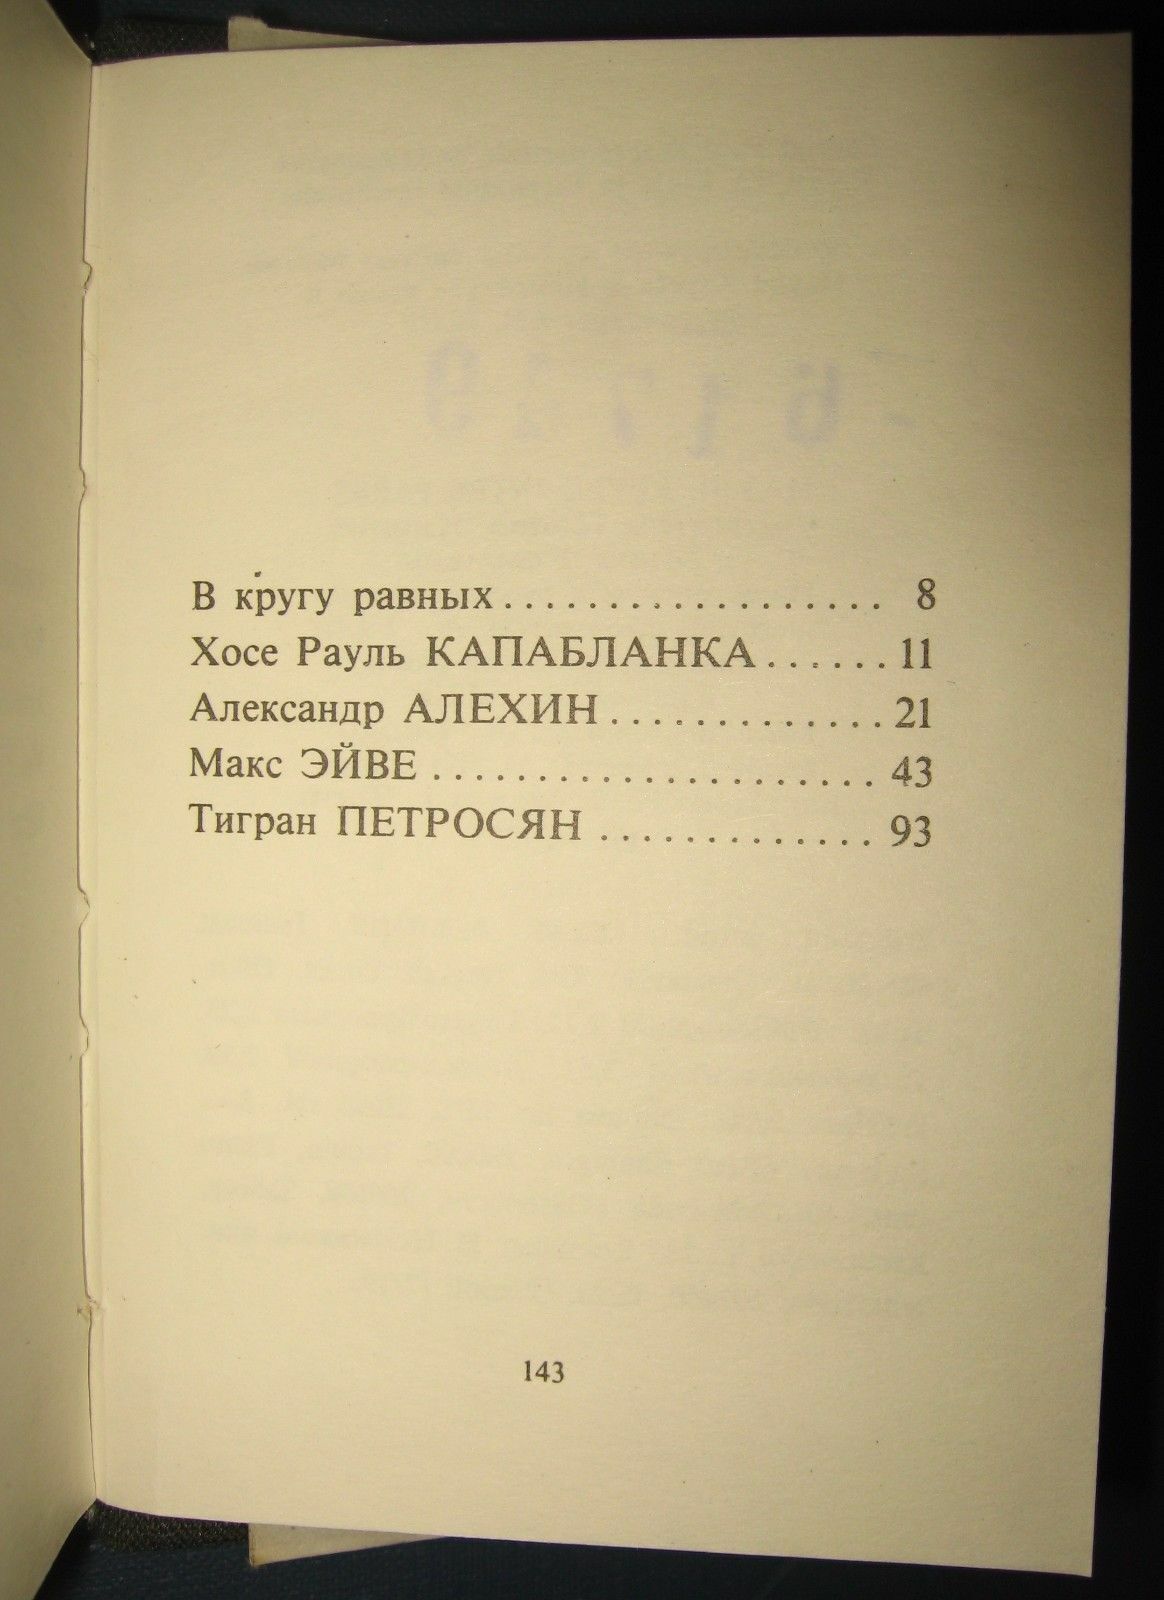 11284.Estonian Chess Minibook: Paavo Kivine, Mart Remmel. Paul Keres inter pares. 1985